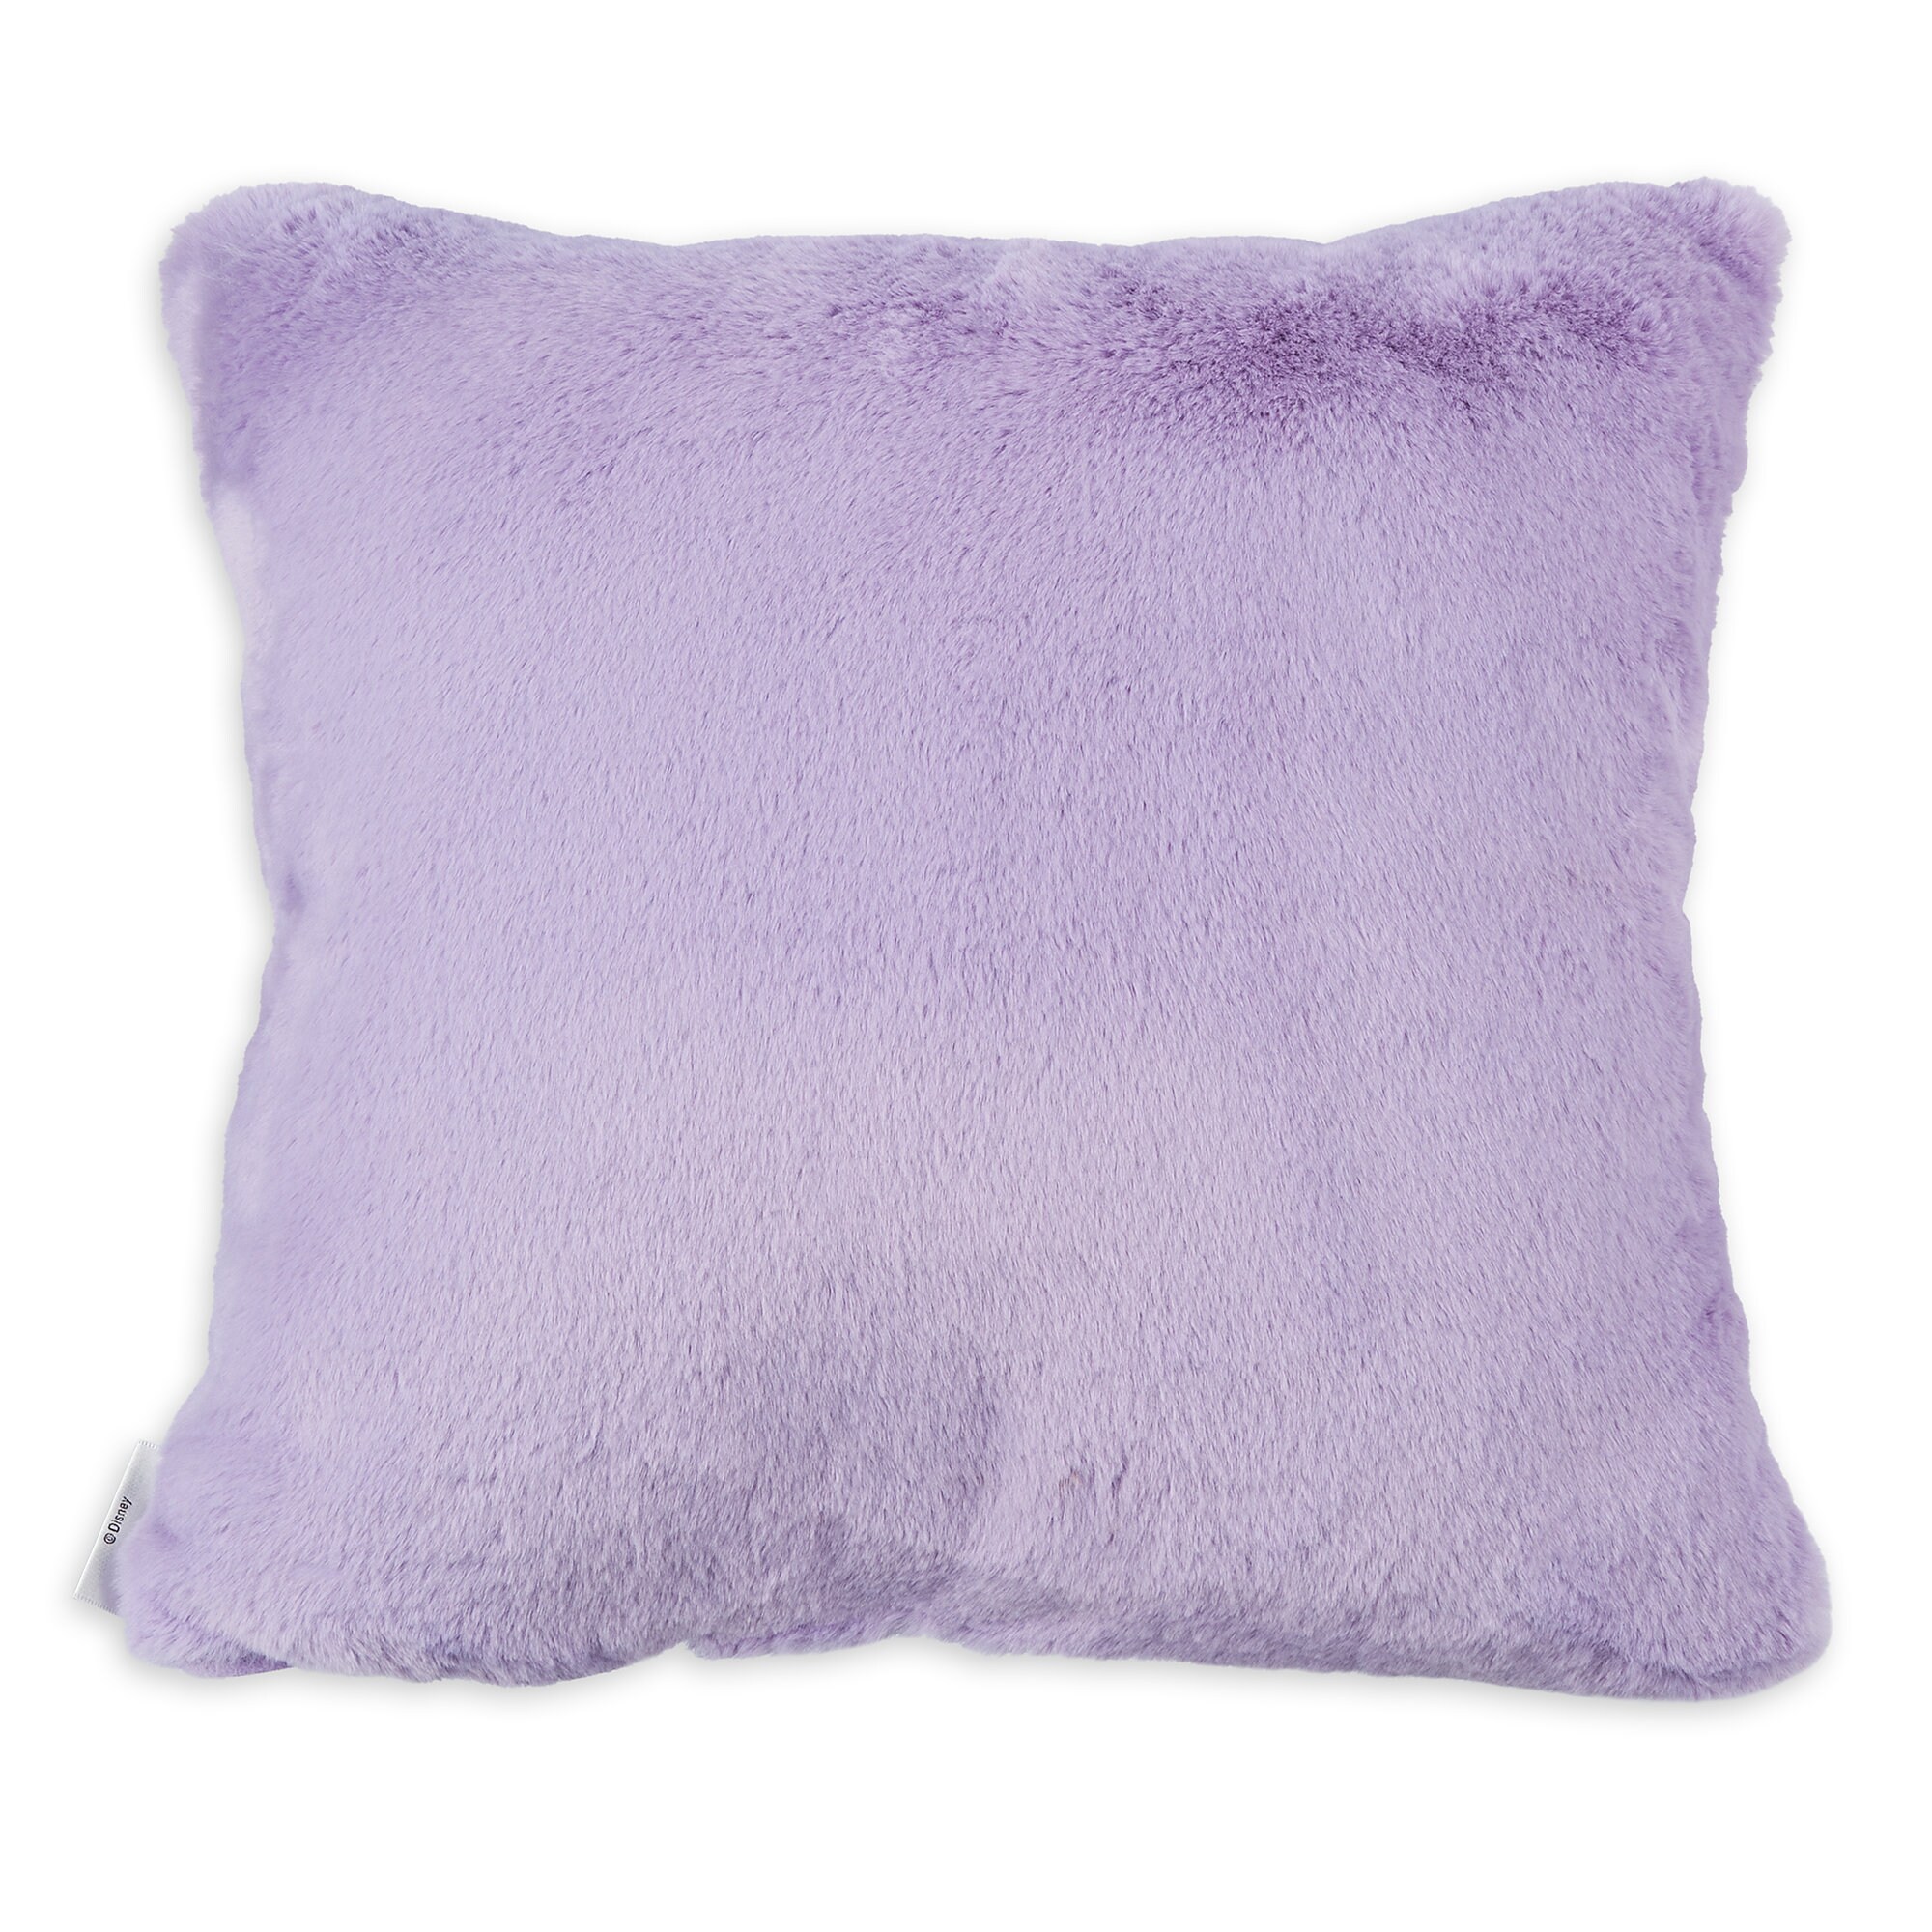 Minnie Mouse Purple Pillow